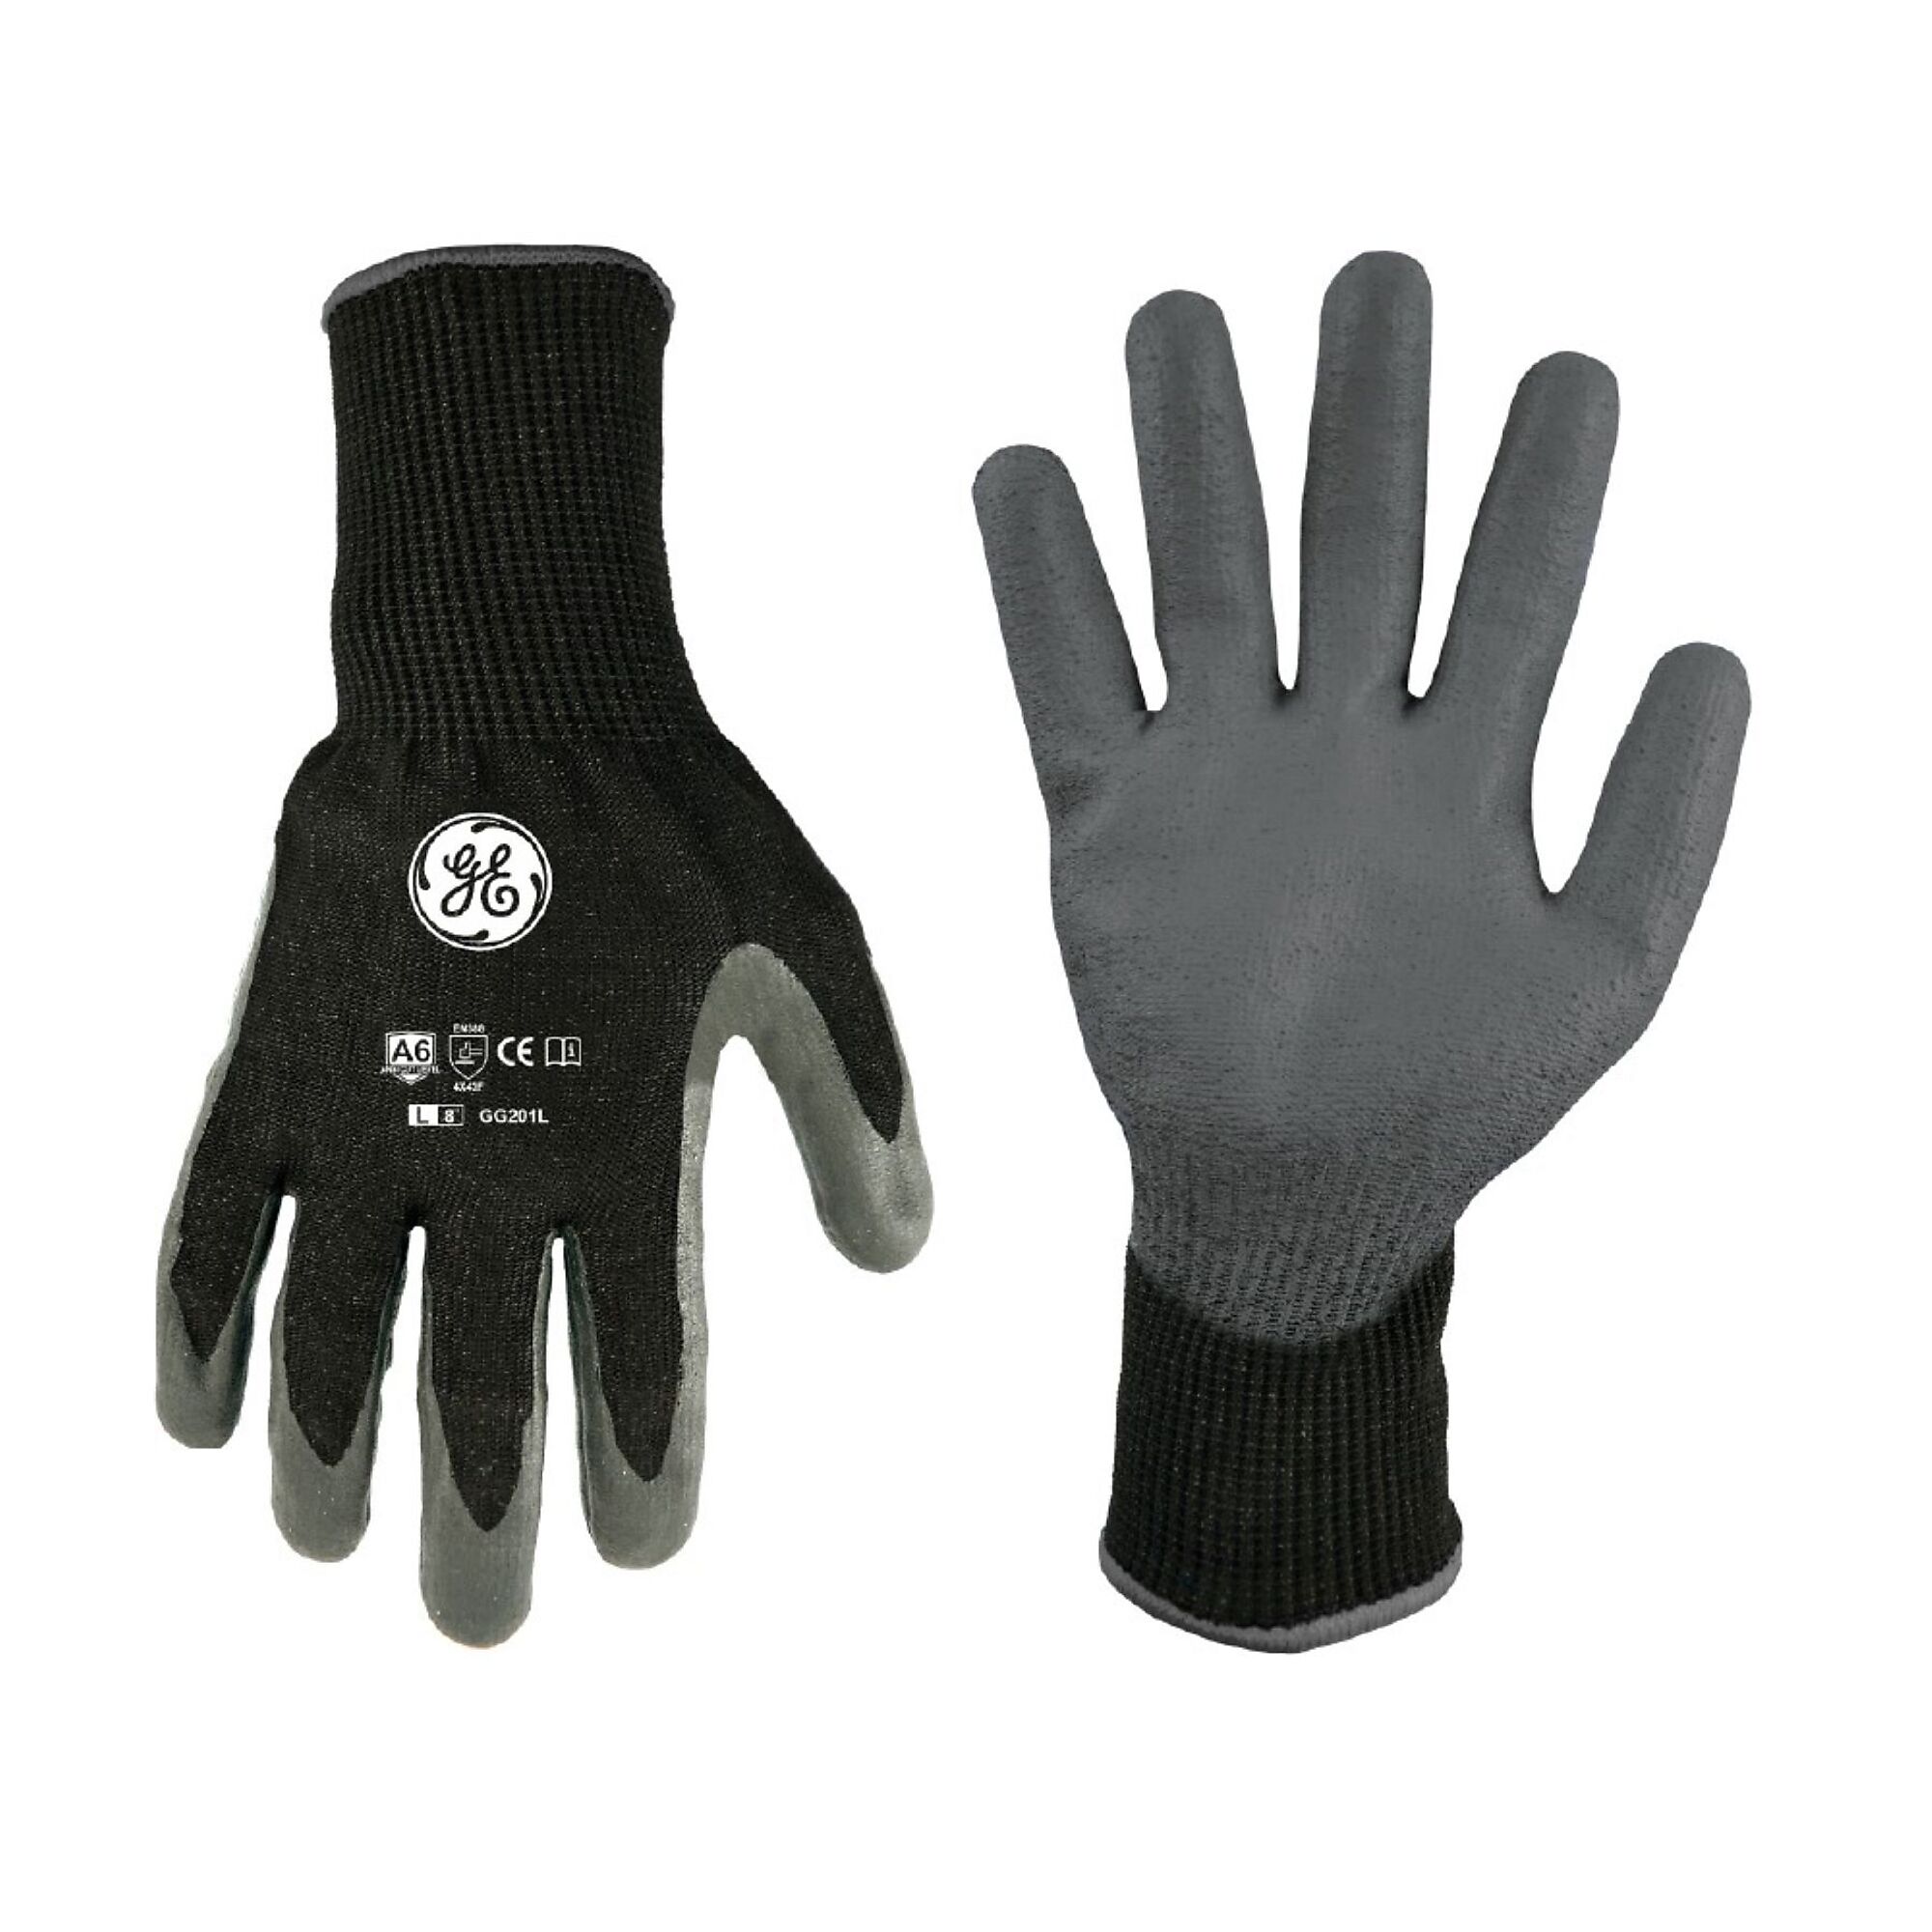 General Electric, Cut Resistant Gloves Black/Gray L 12 pair, Size L, Color Black, Included (qty.) 12 Model GG201L